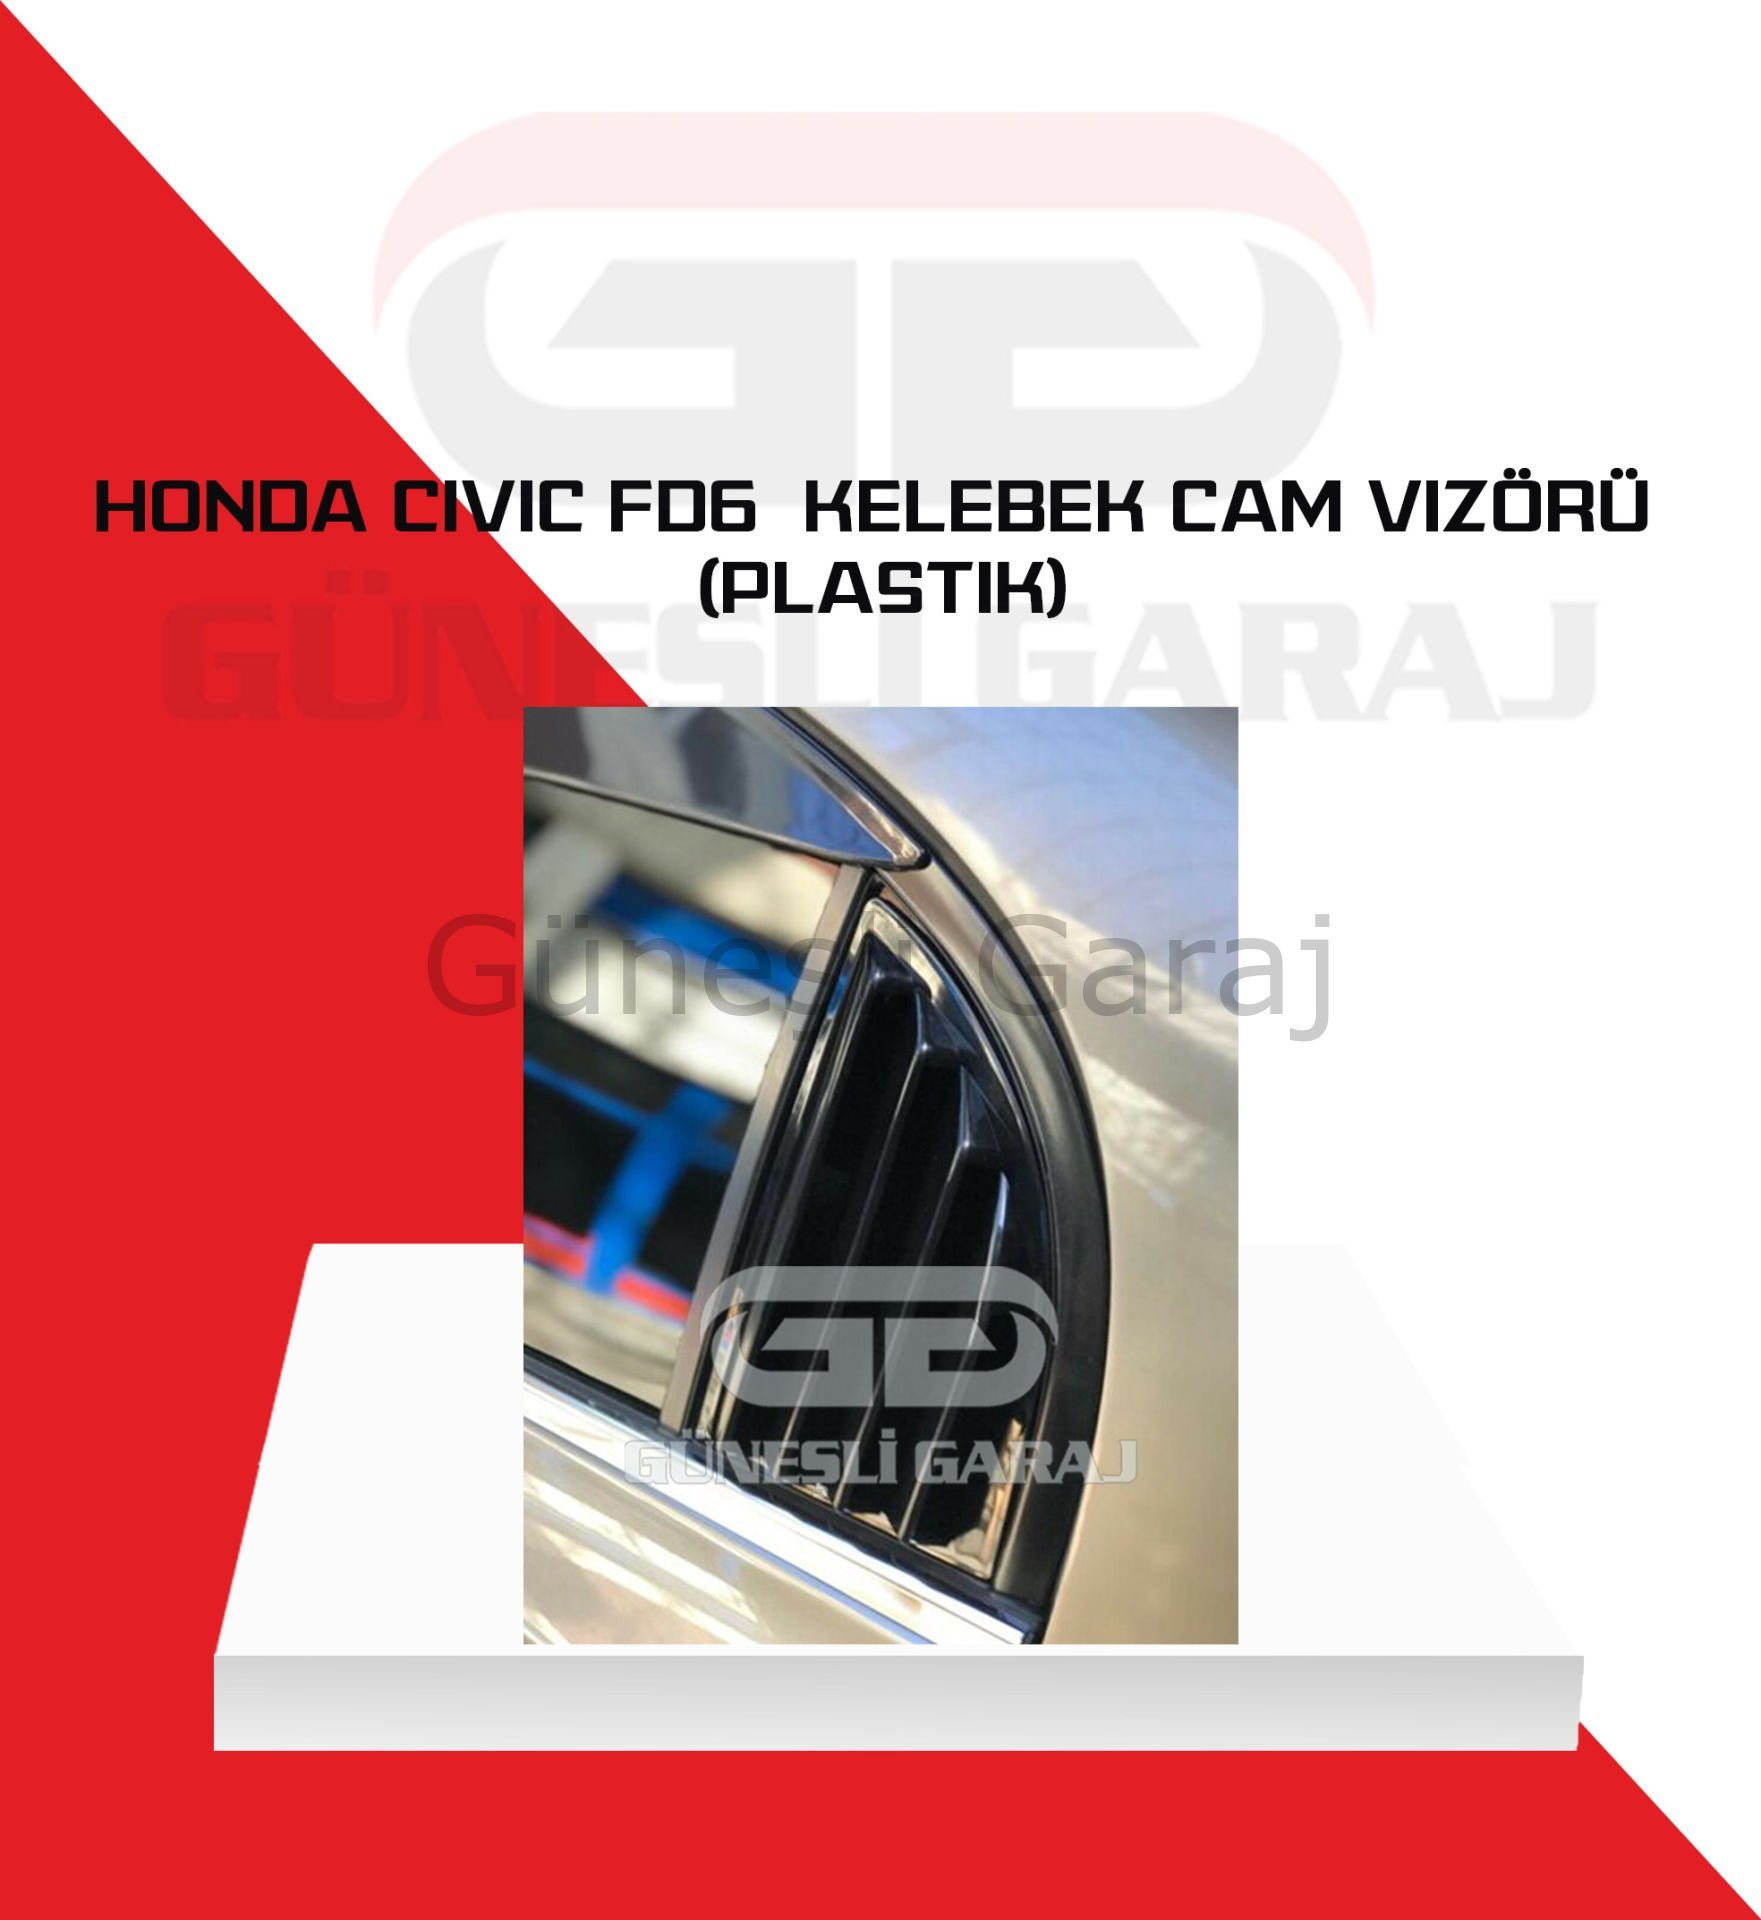 Honda Civic Fd6 Kelebek Cam Vizörü (Plastik)